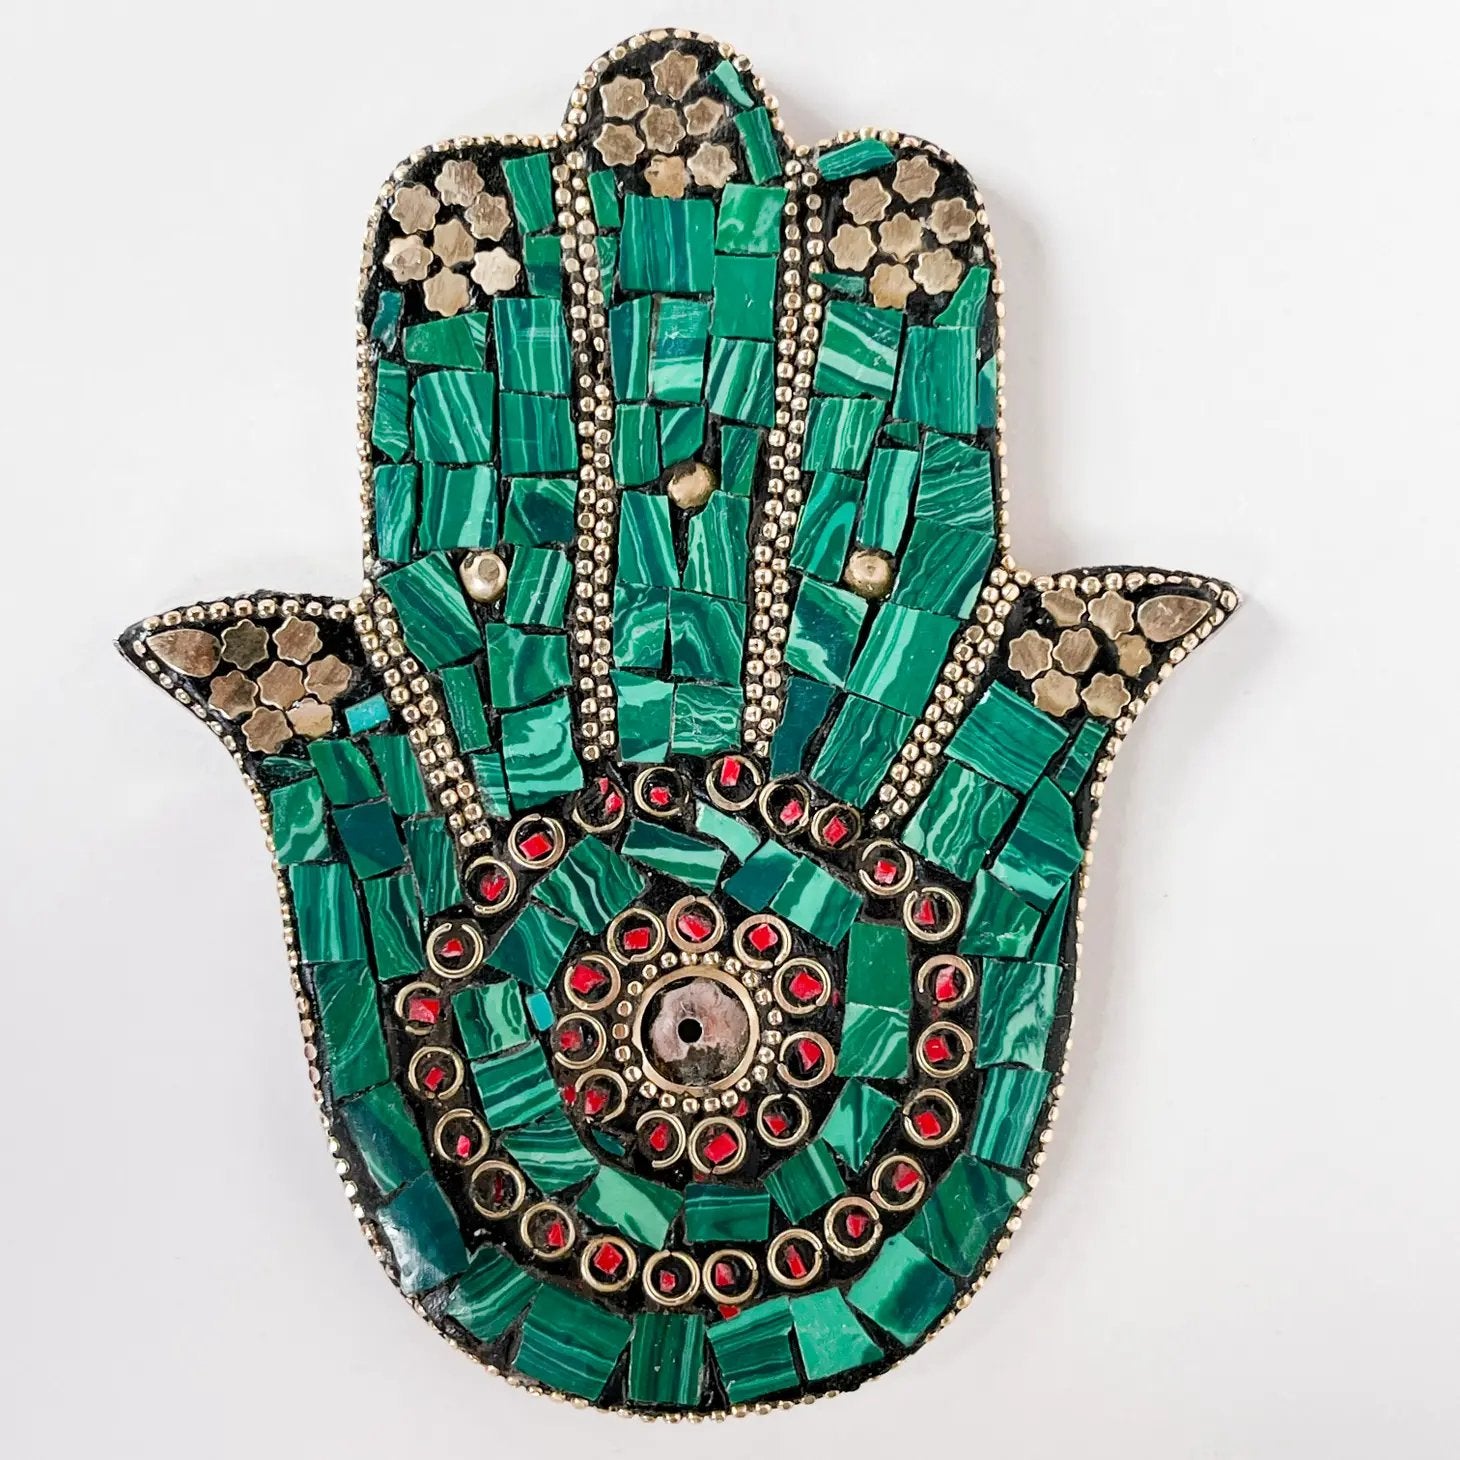 Hamsa Hand Incense Holder (Emerald) - Incense Holders